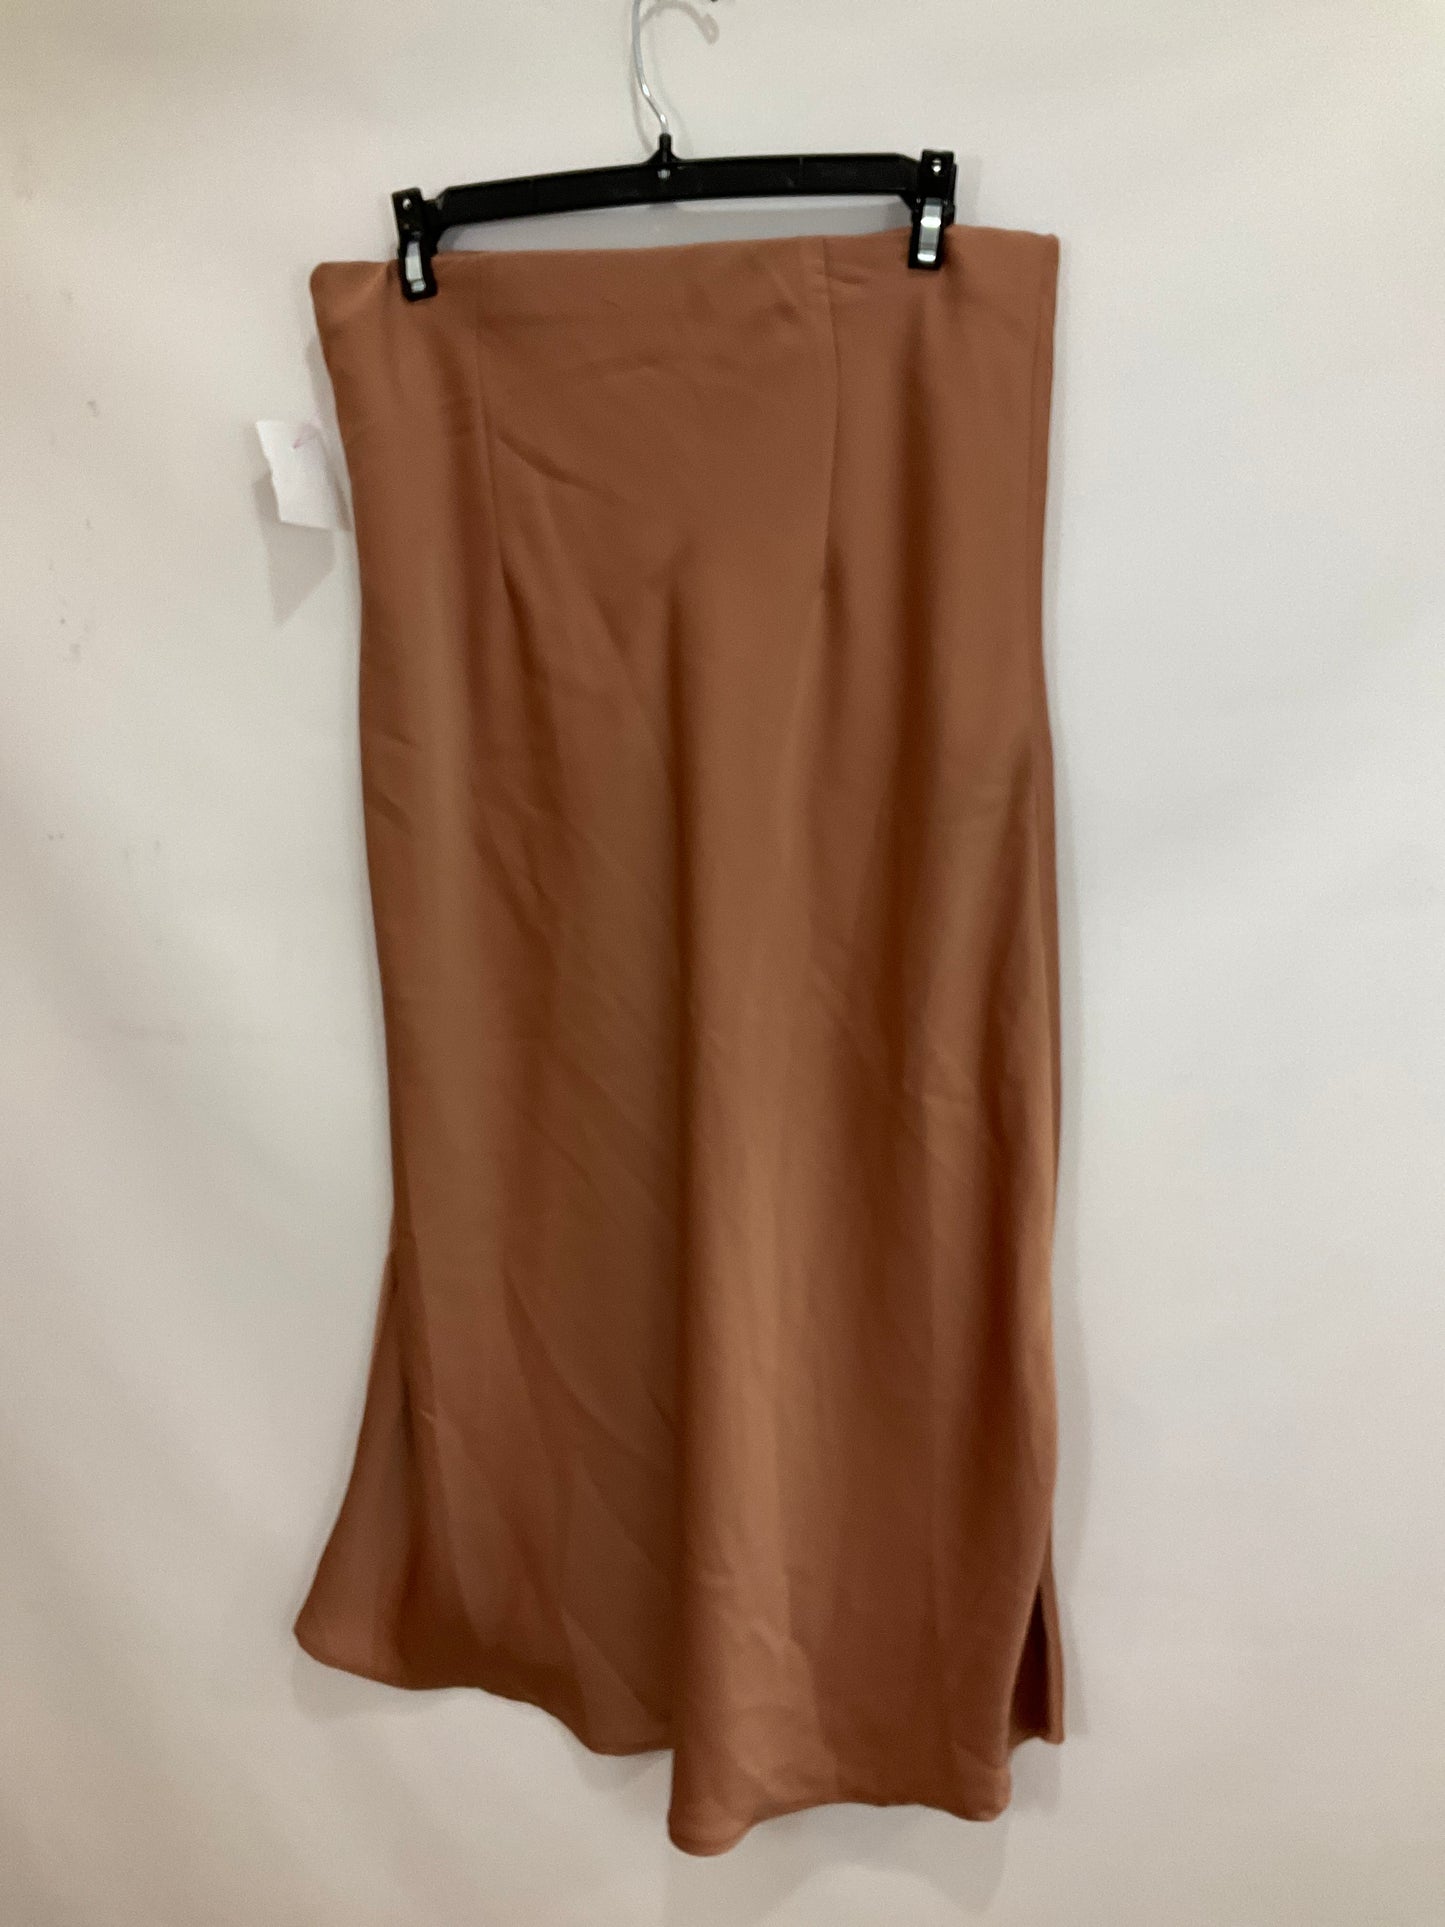 Skirt Midi By Rachel Zoe  Size: 6